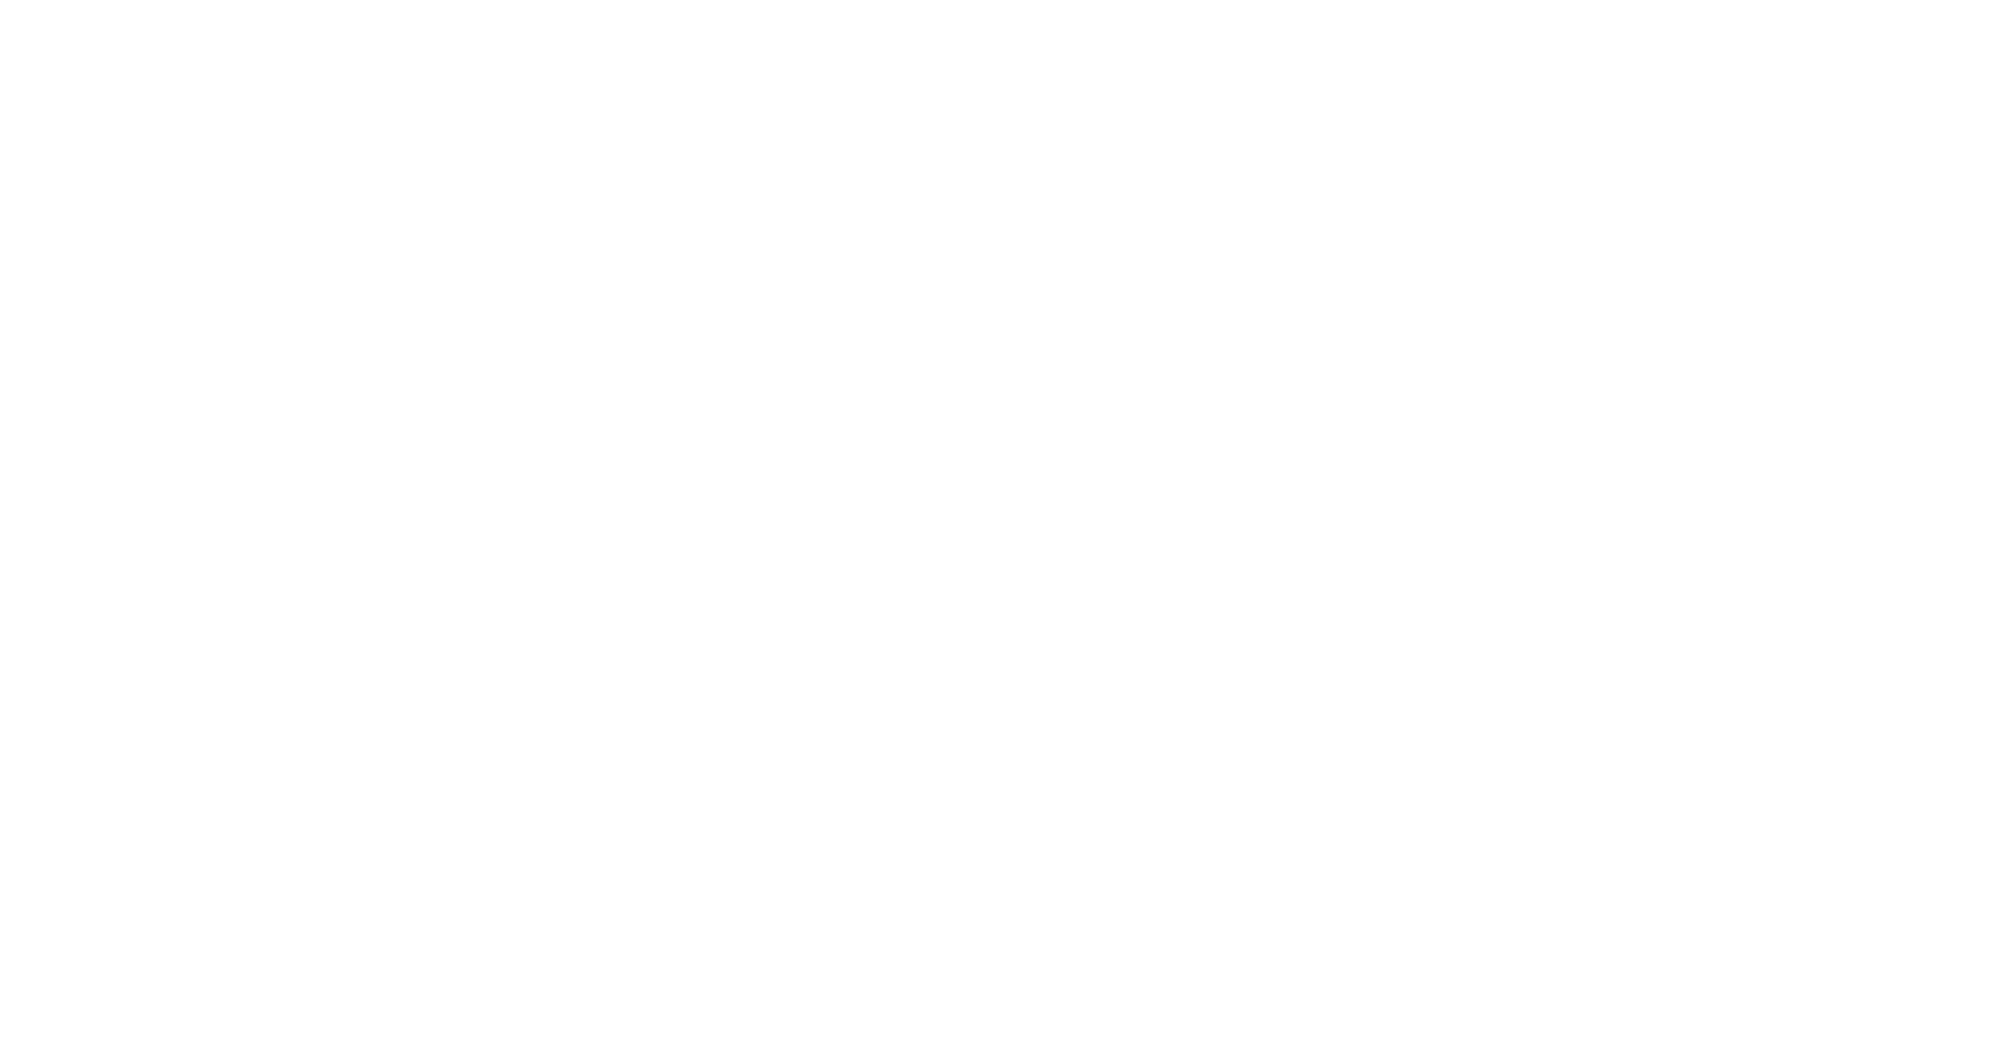 Kanso logomark representing data bar chart and cityscape